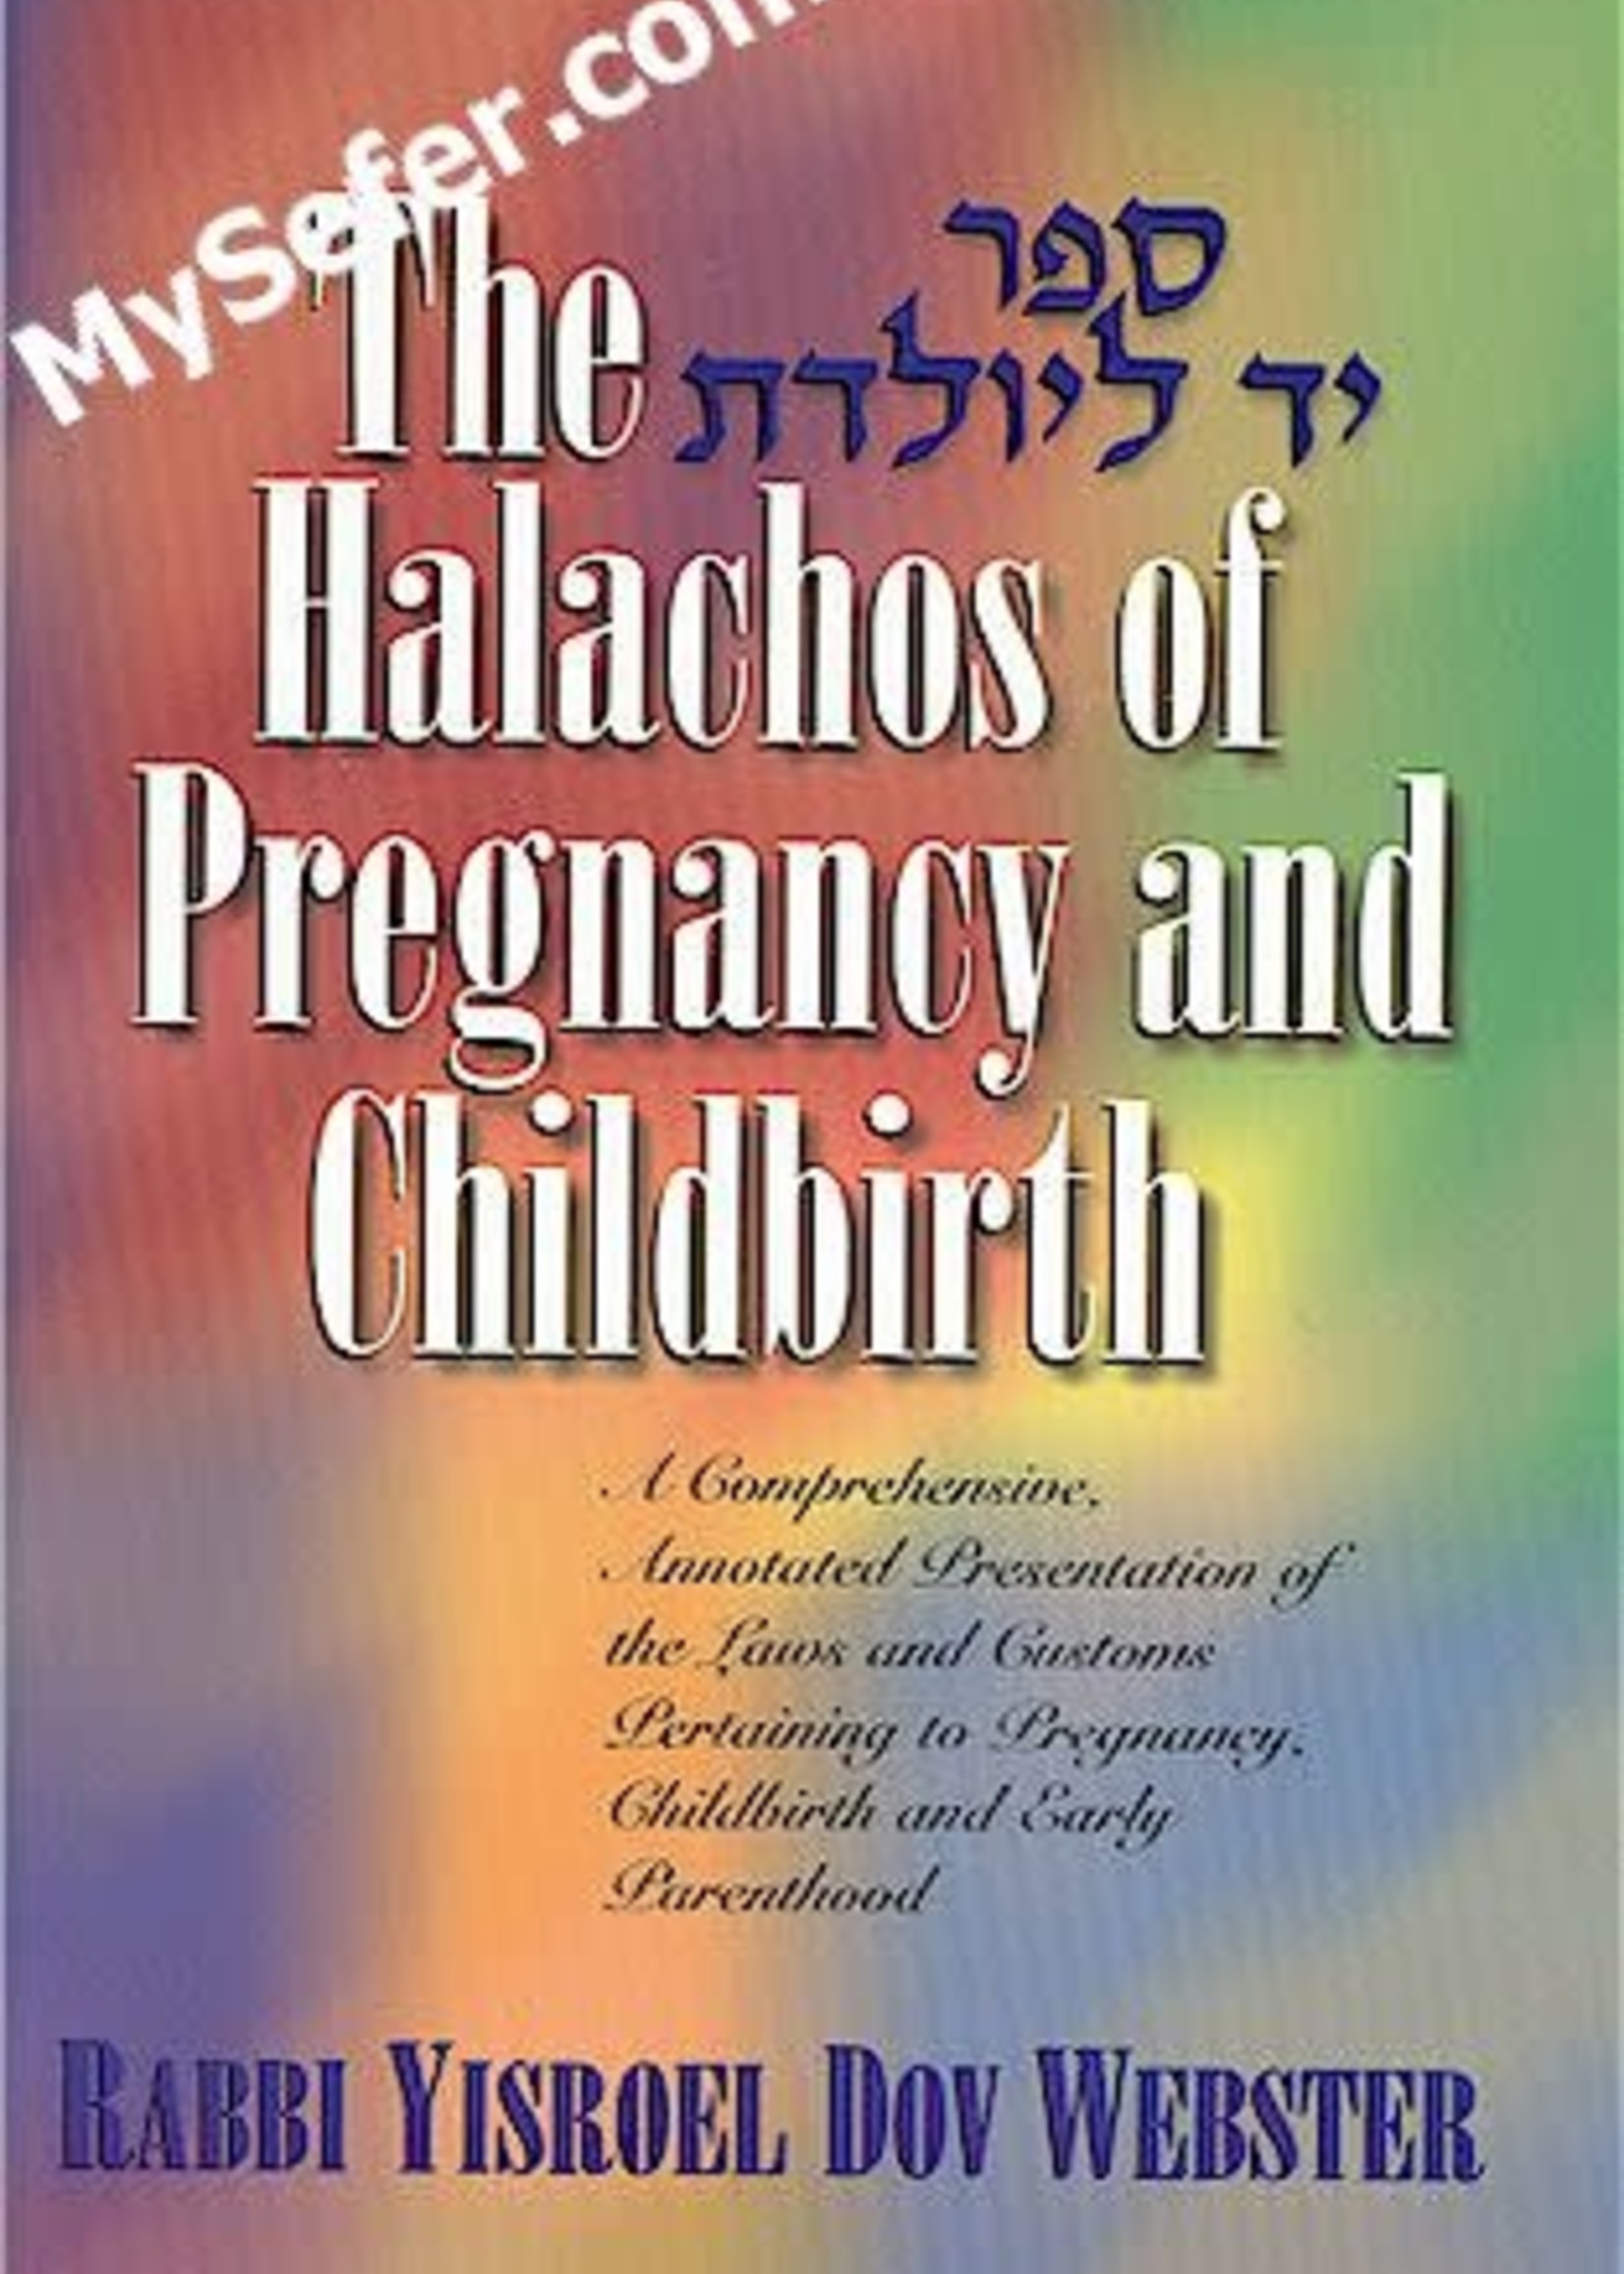 Halachos of Pregnancy and Childbirth / Sefer Yad La'Yoledet